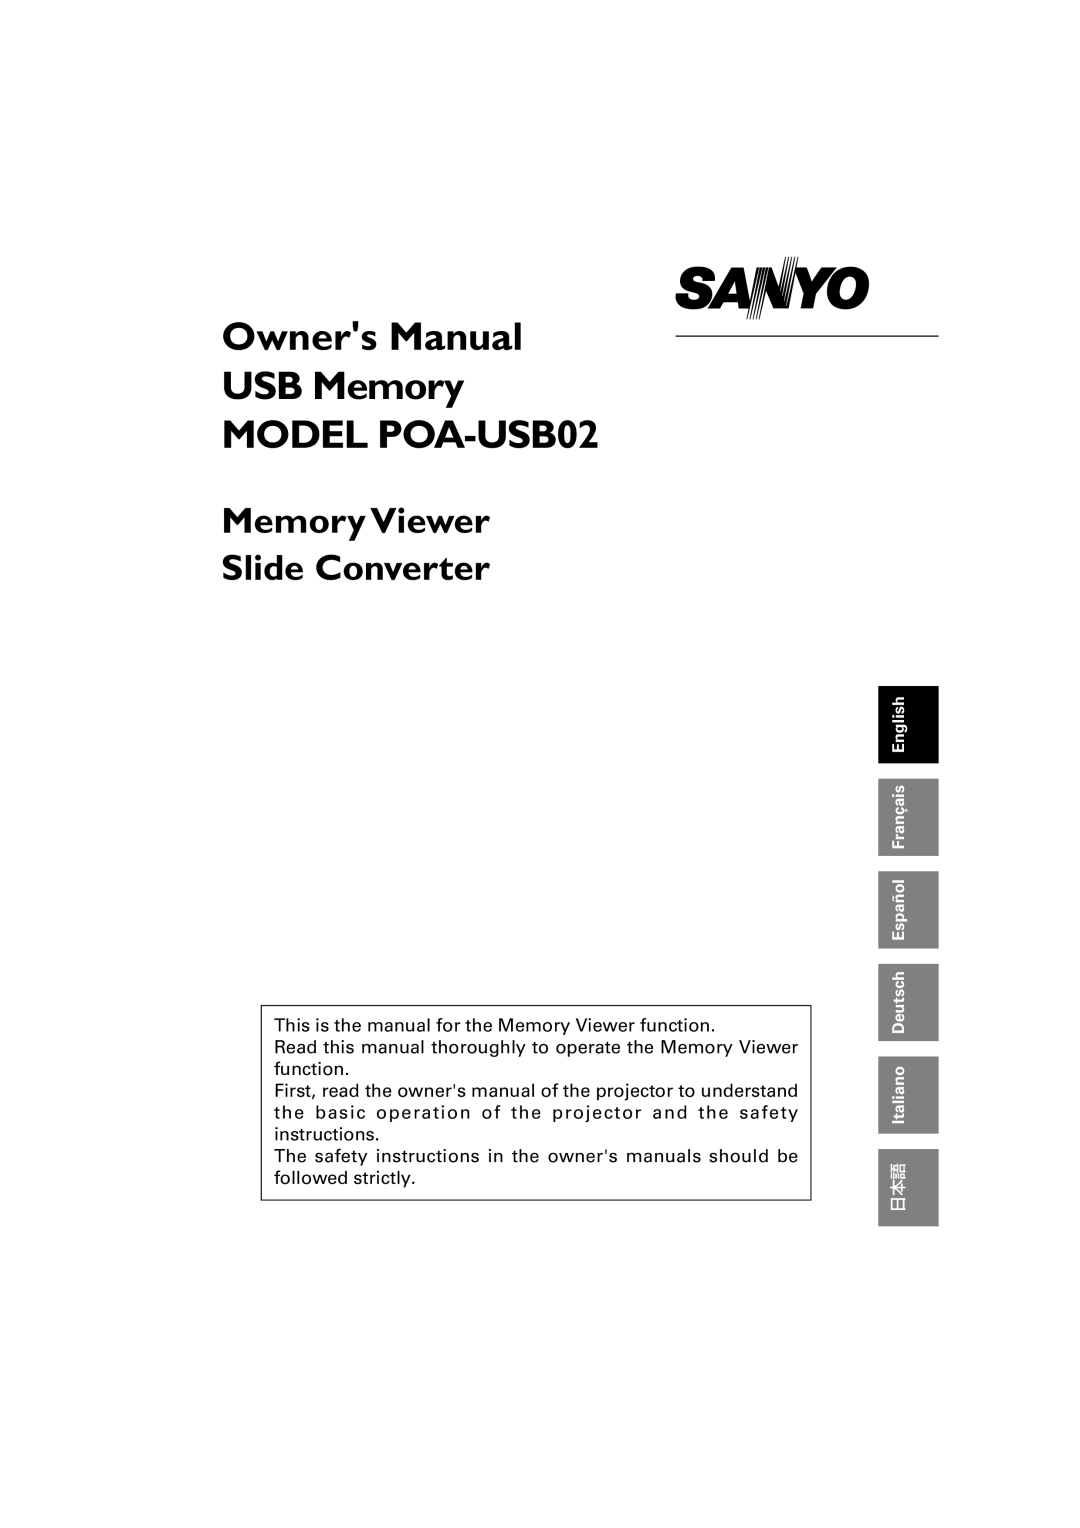 Sanyo owner manual Owners Manual USB Memory MODEL POA-USB02, Memory Viewer Slide Converter 